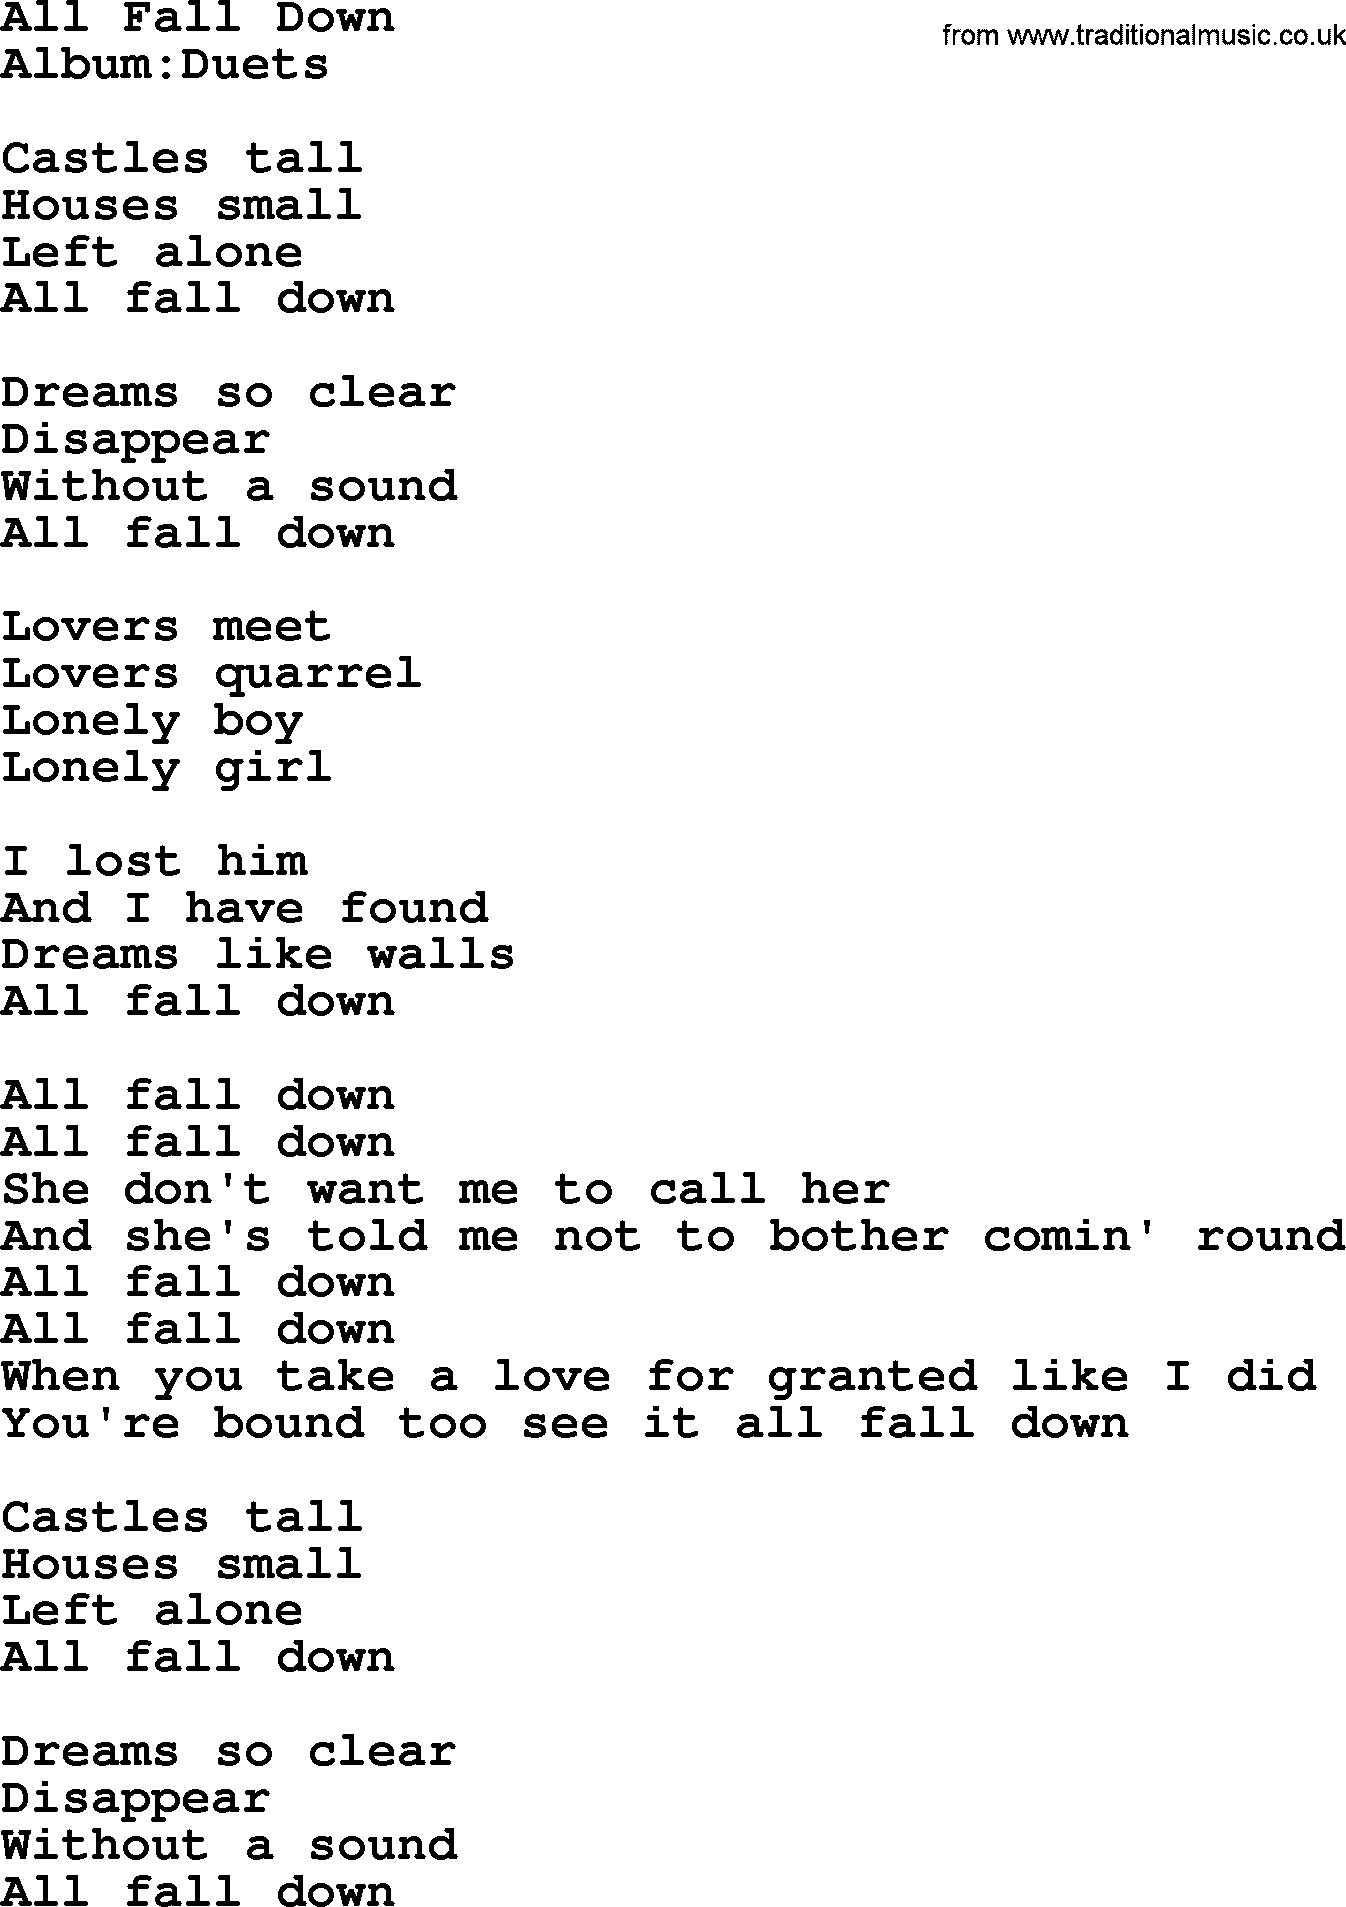 Emmylou Harris song: All Fall Down lyrics